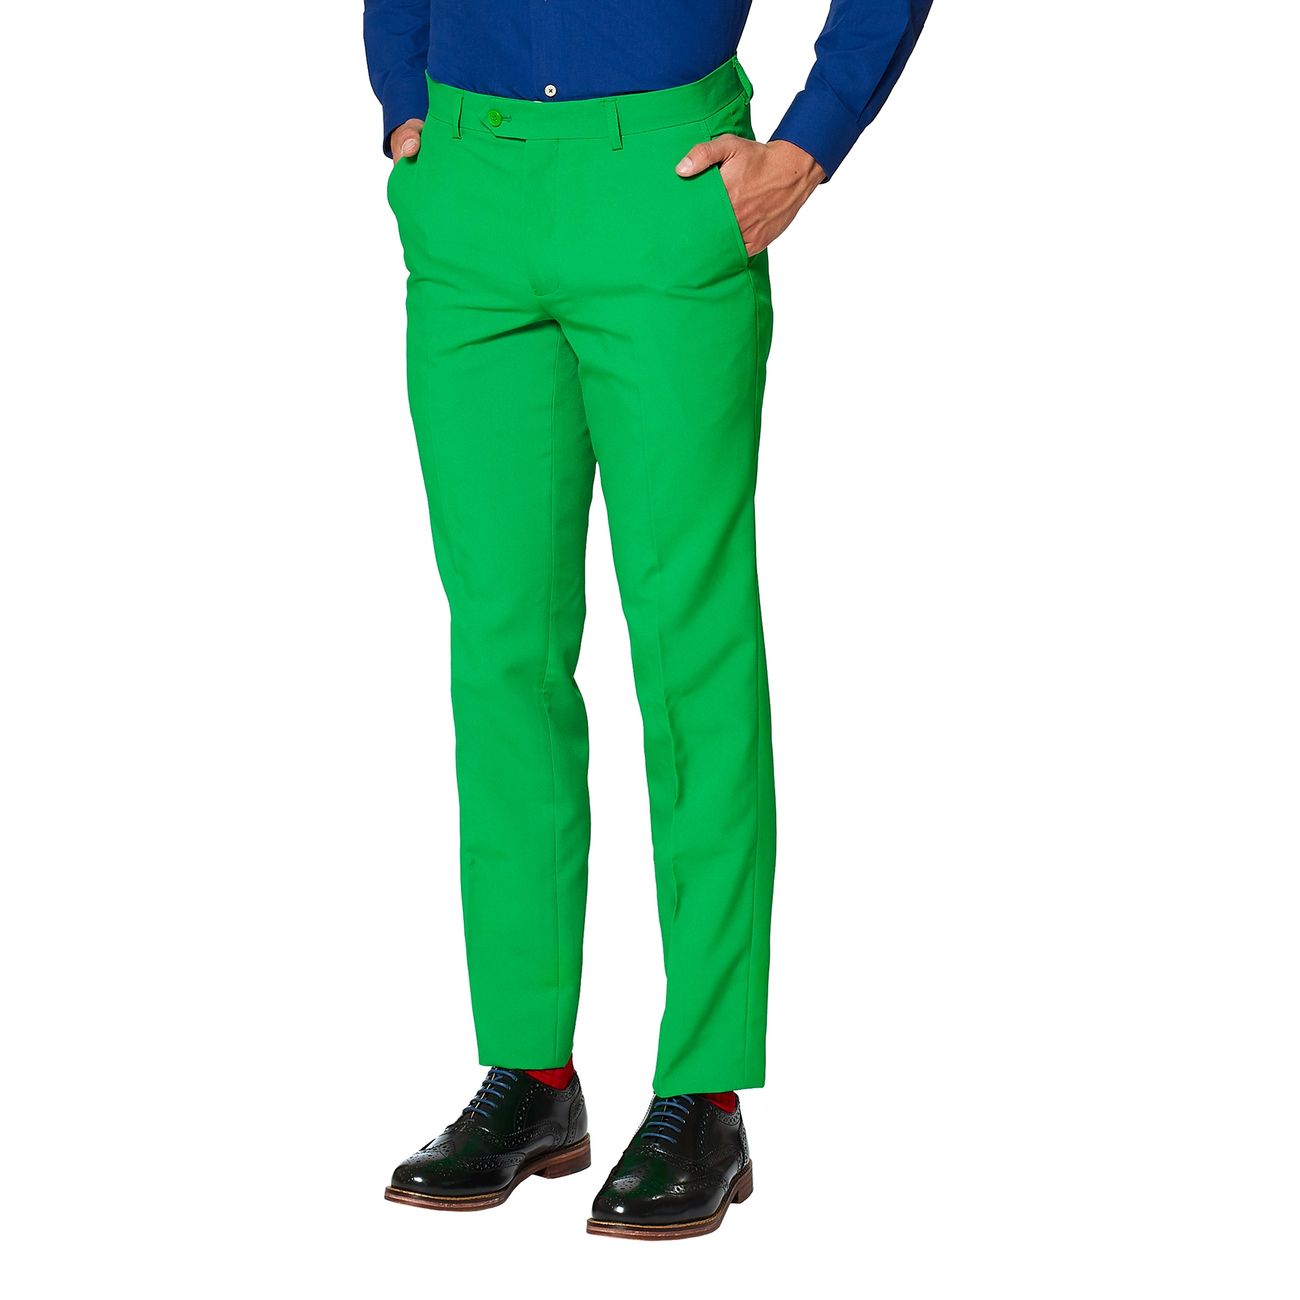 opposuits-evergreen-kostym-30658-9